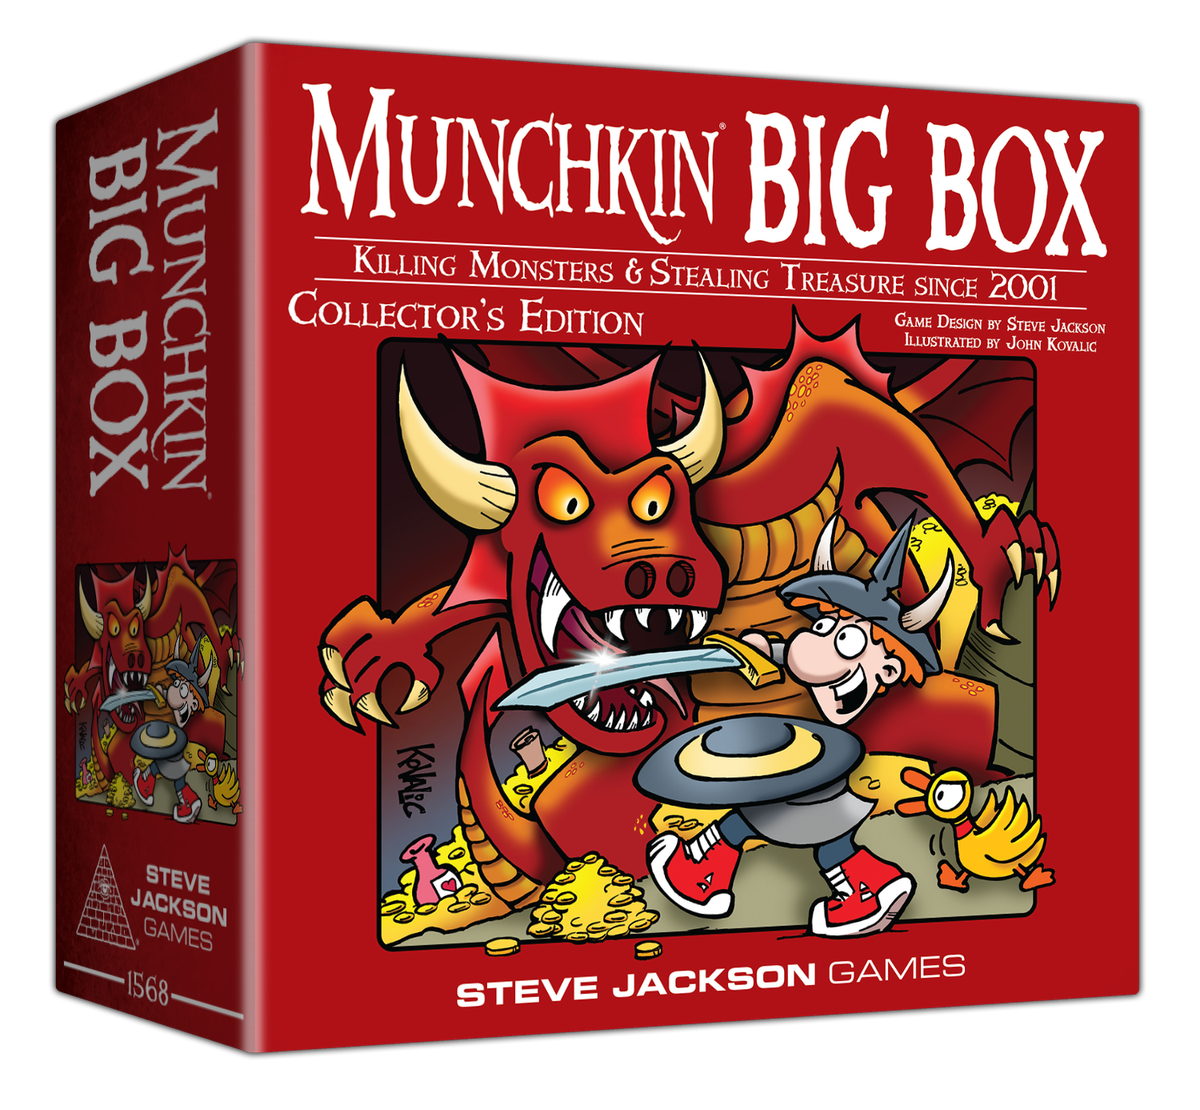 Steve Jackson Games Debuts Munchkin Big Box